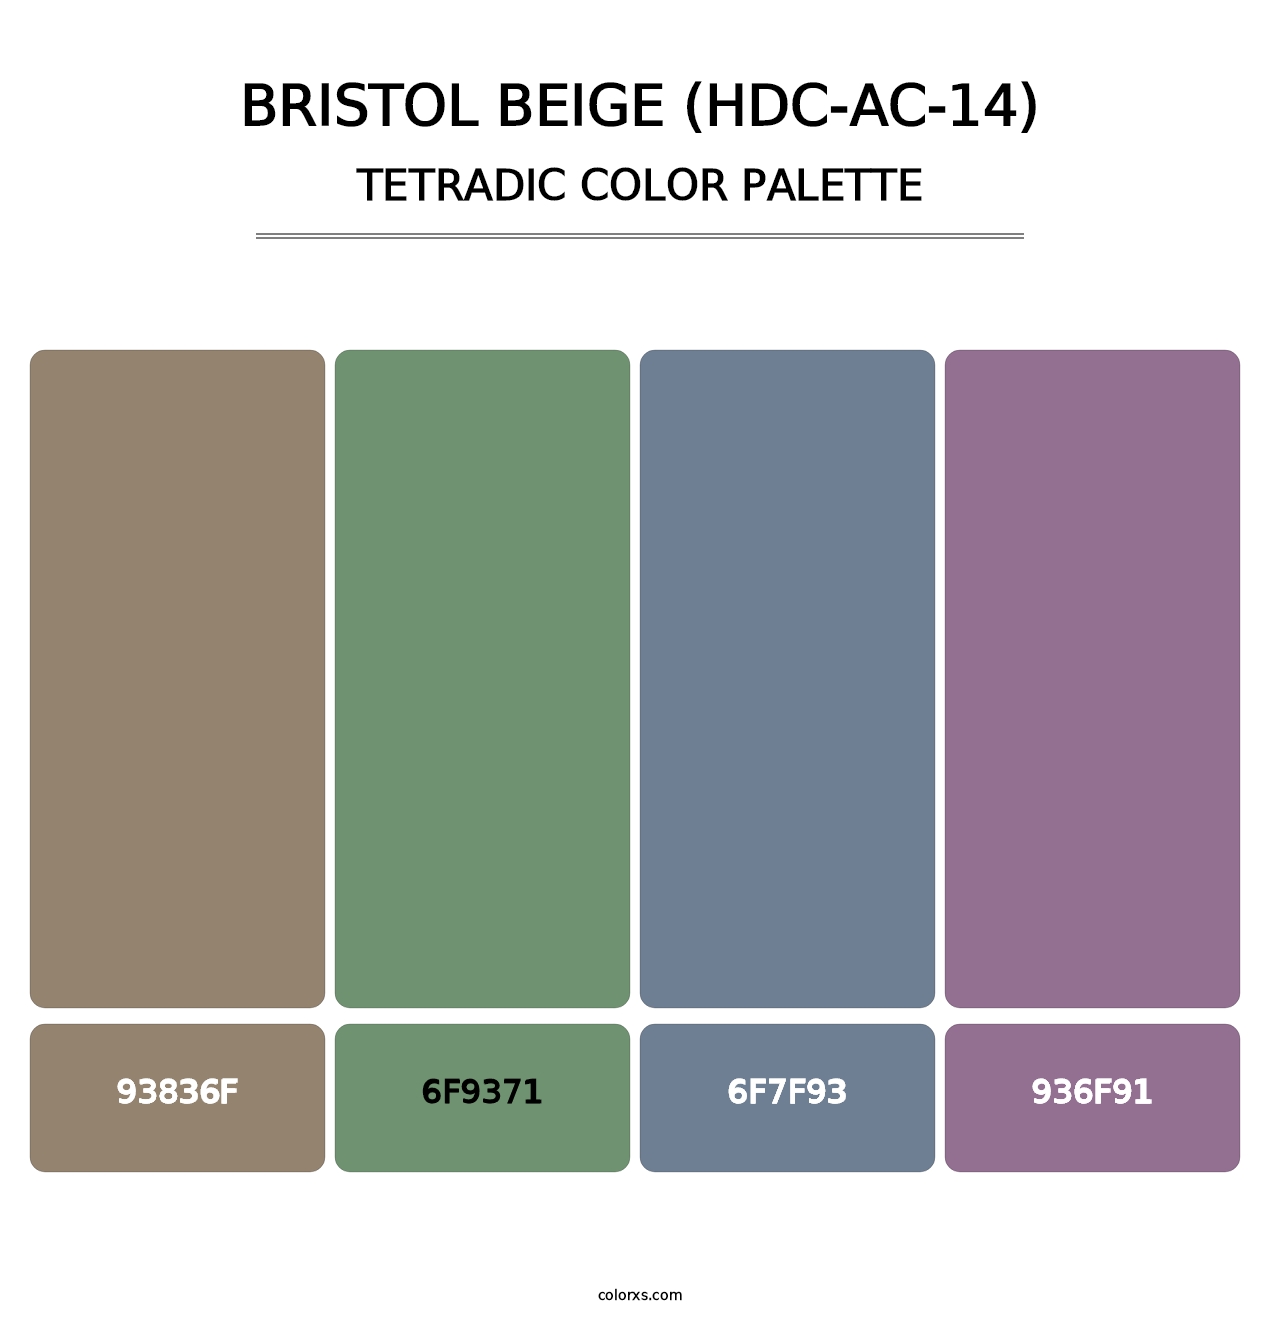 Bristol Beige (HDC-AC-14) - Tetradic Color Palette